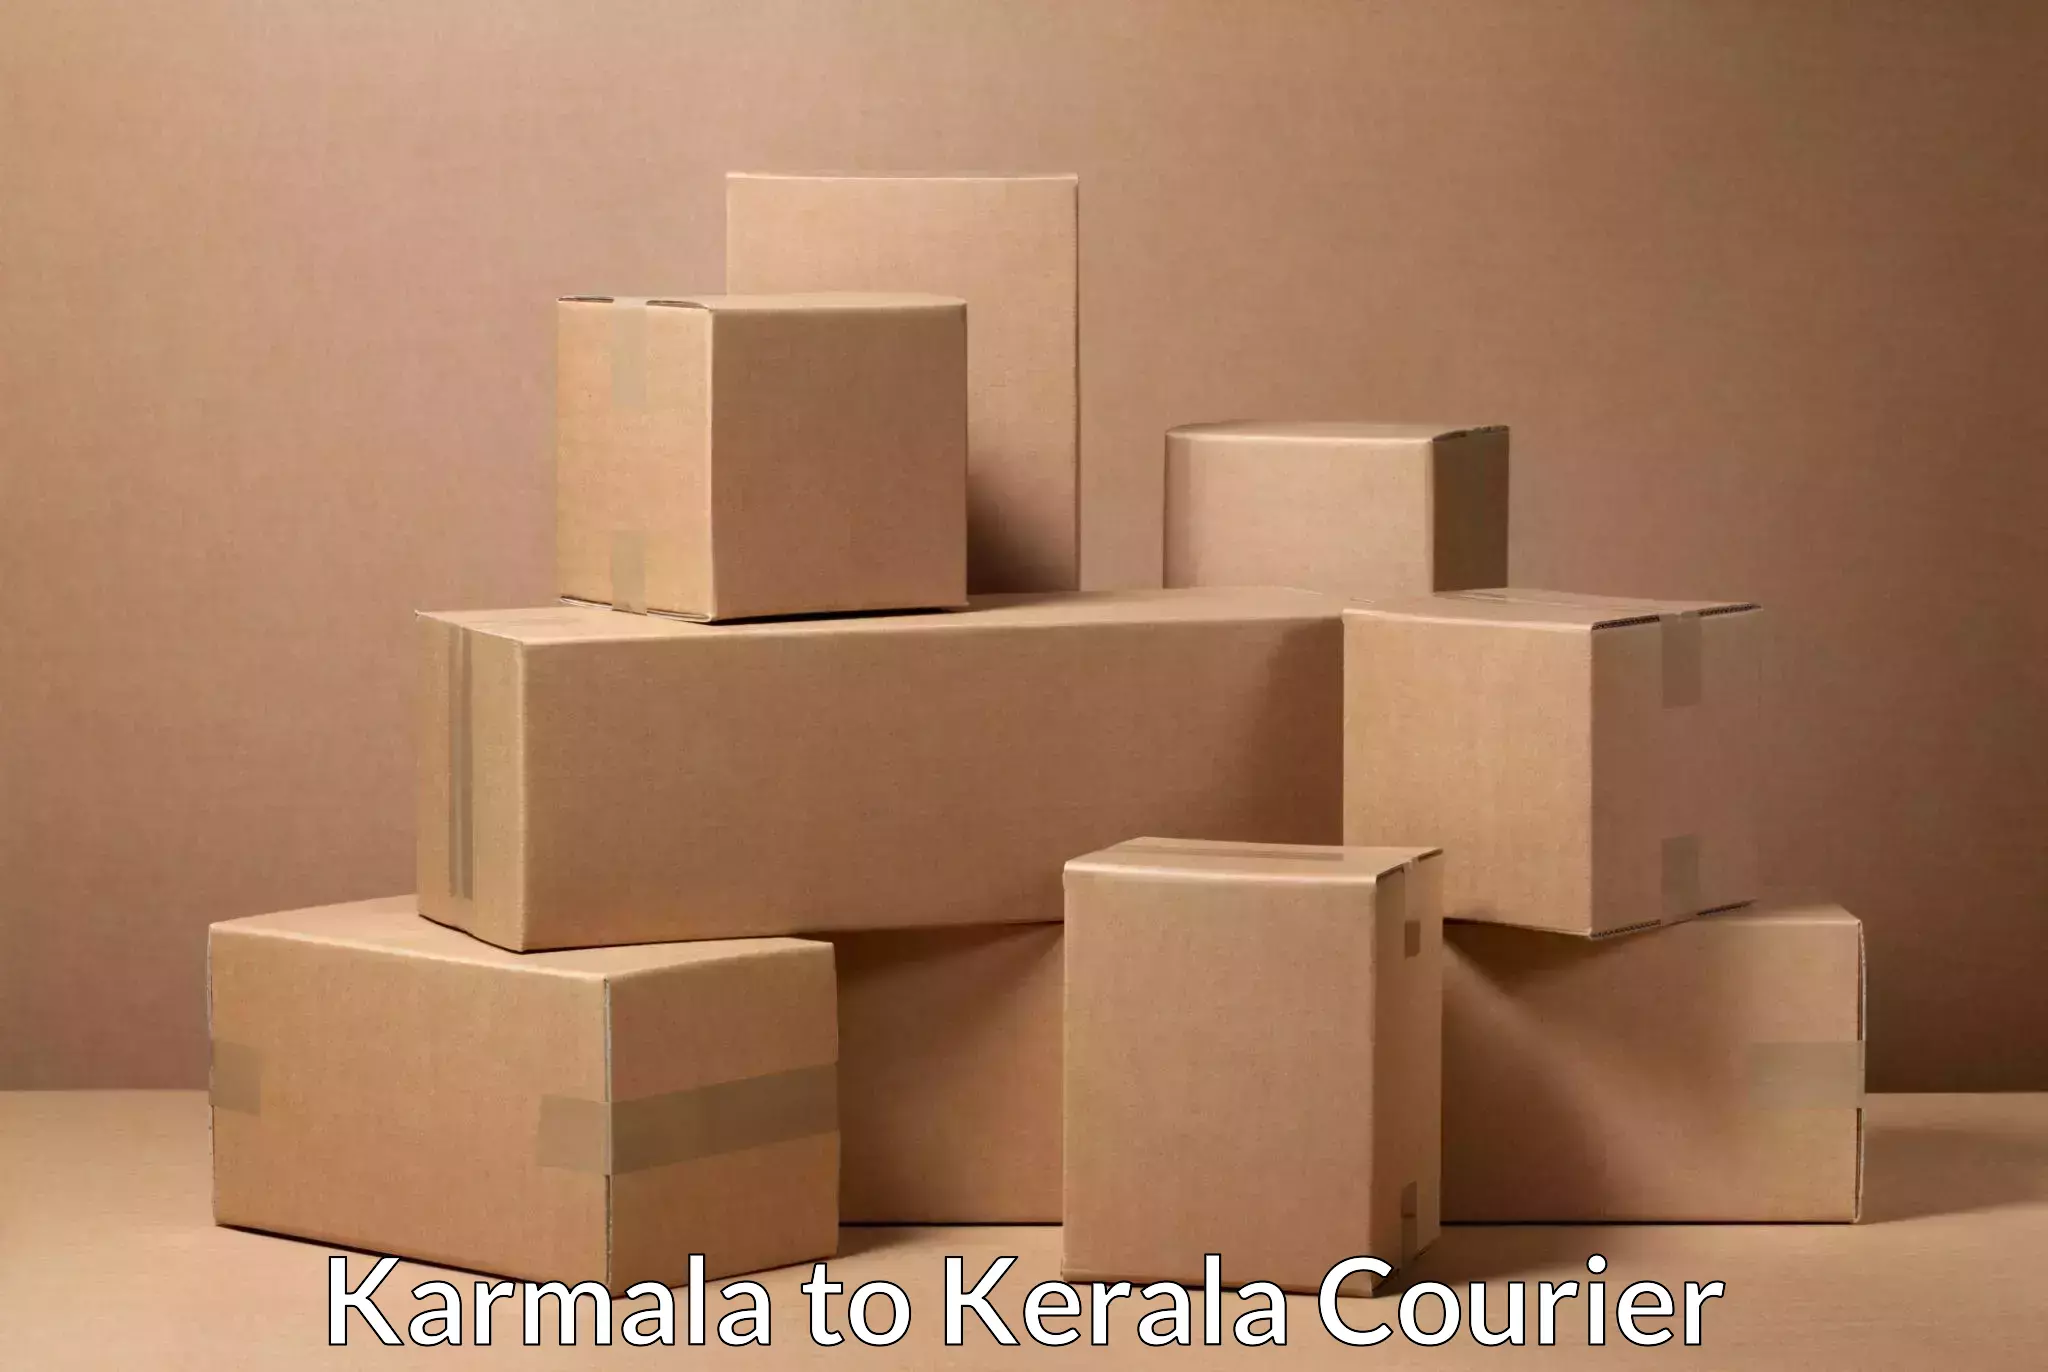 High-performance logistics Karmala to Kerala